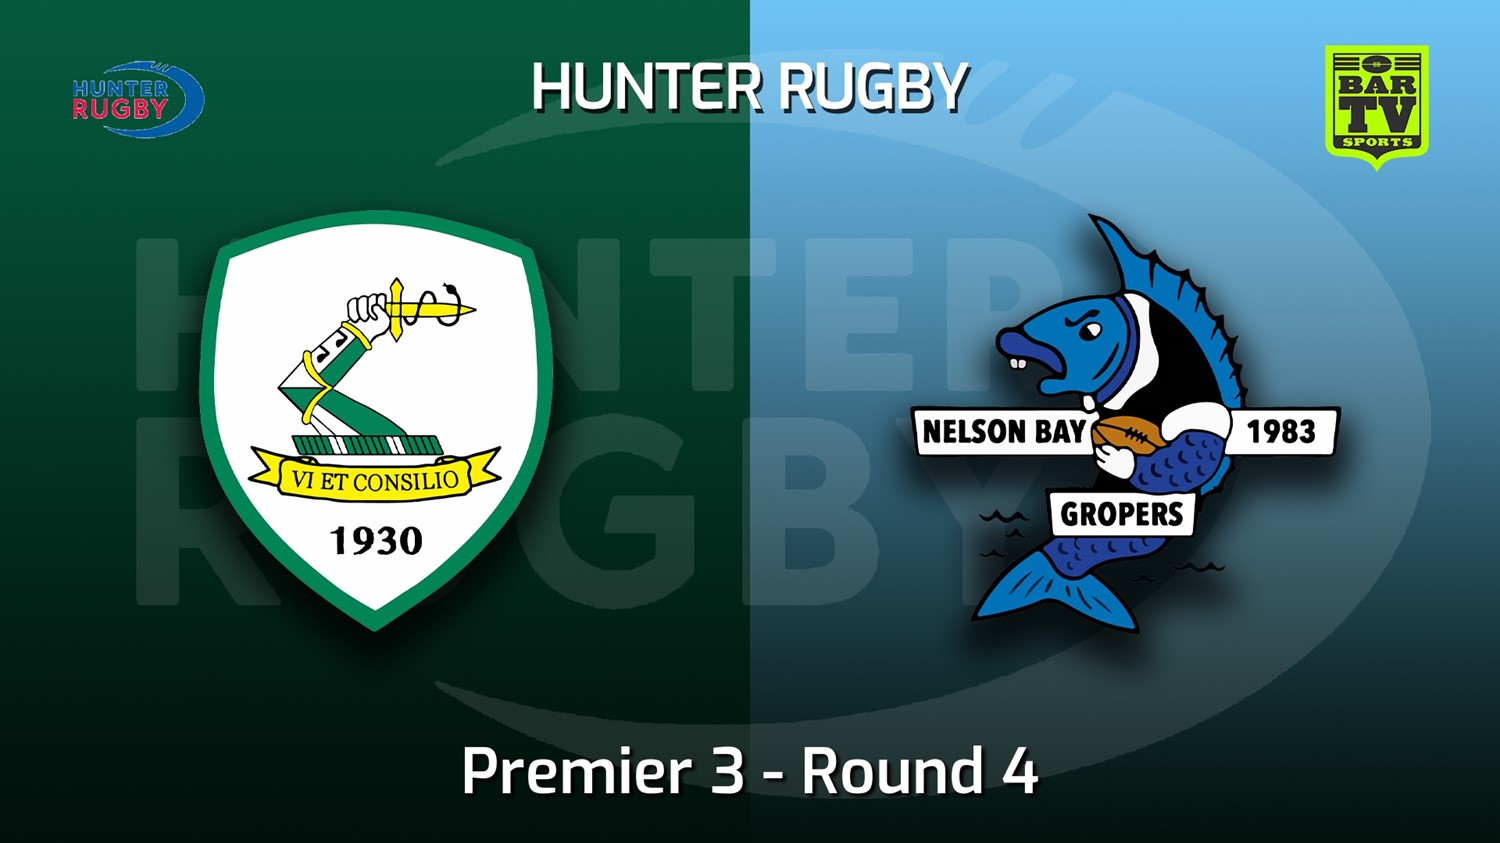 220514-Hunter Rugby Round 4 - Premier 3 - Merewether Carlton v Nelson Bay Gropers Slate Image